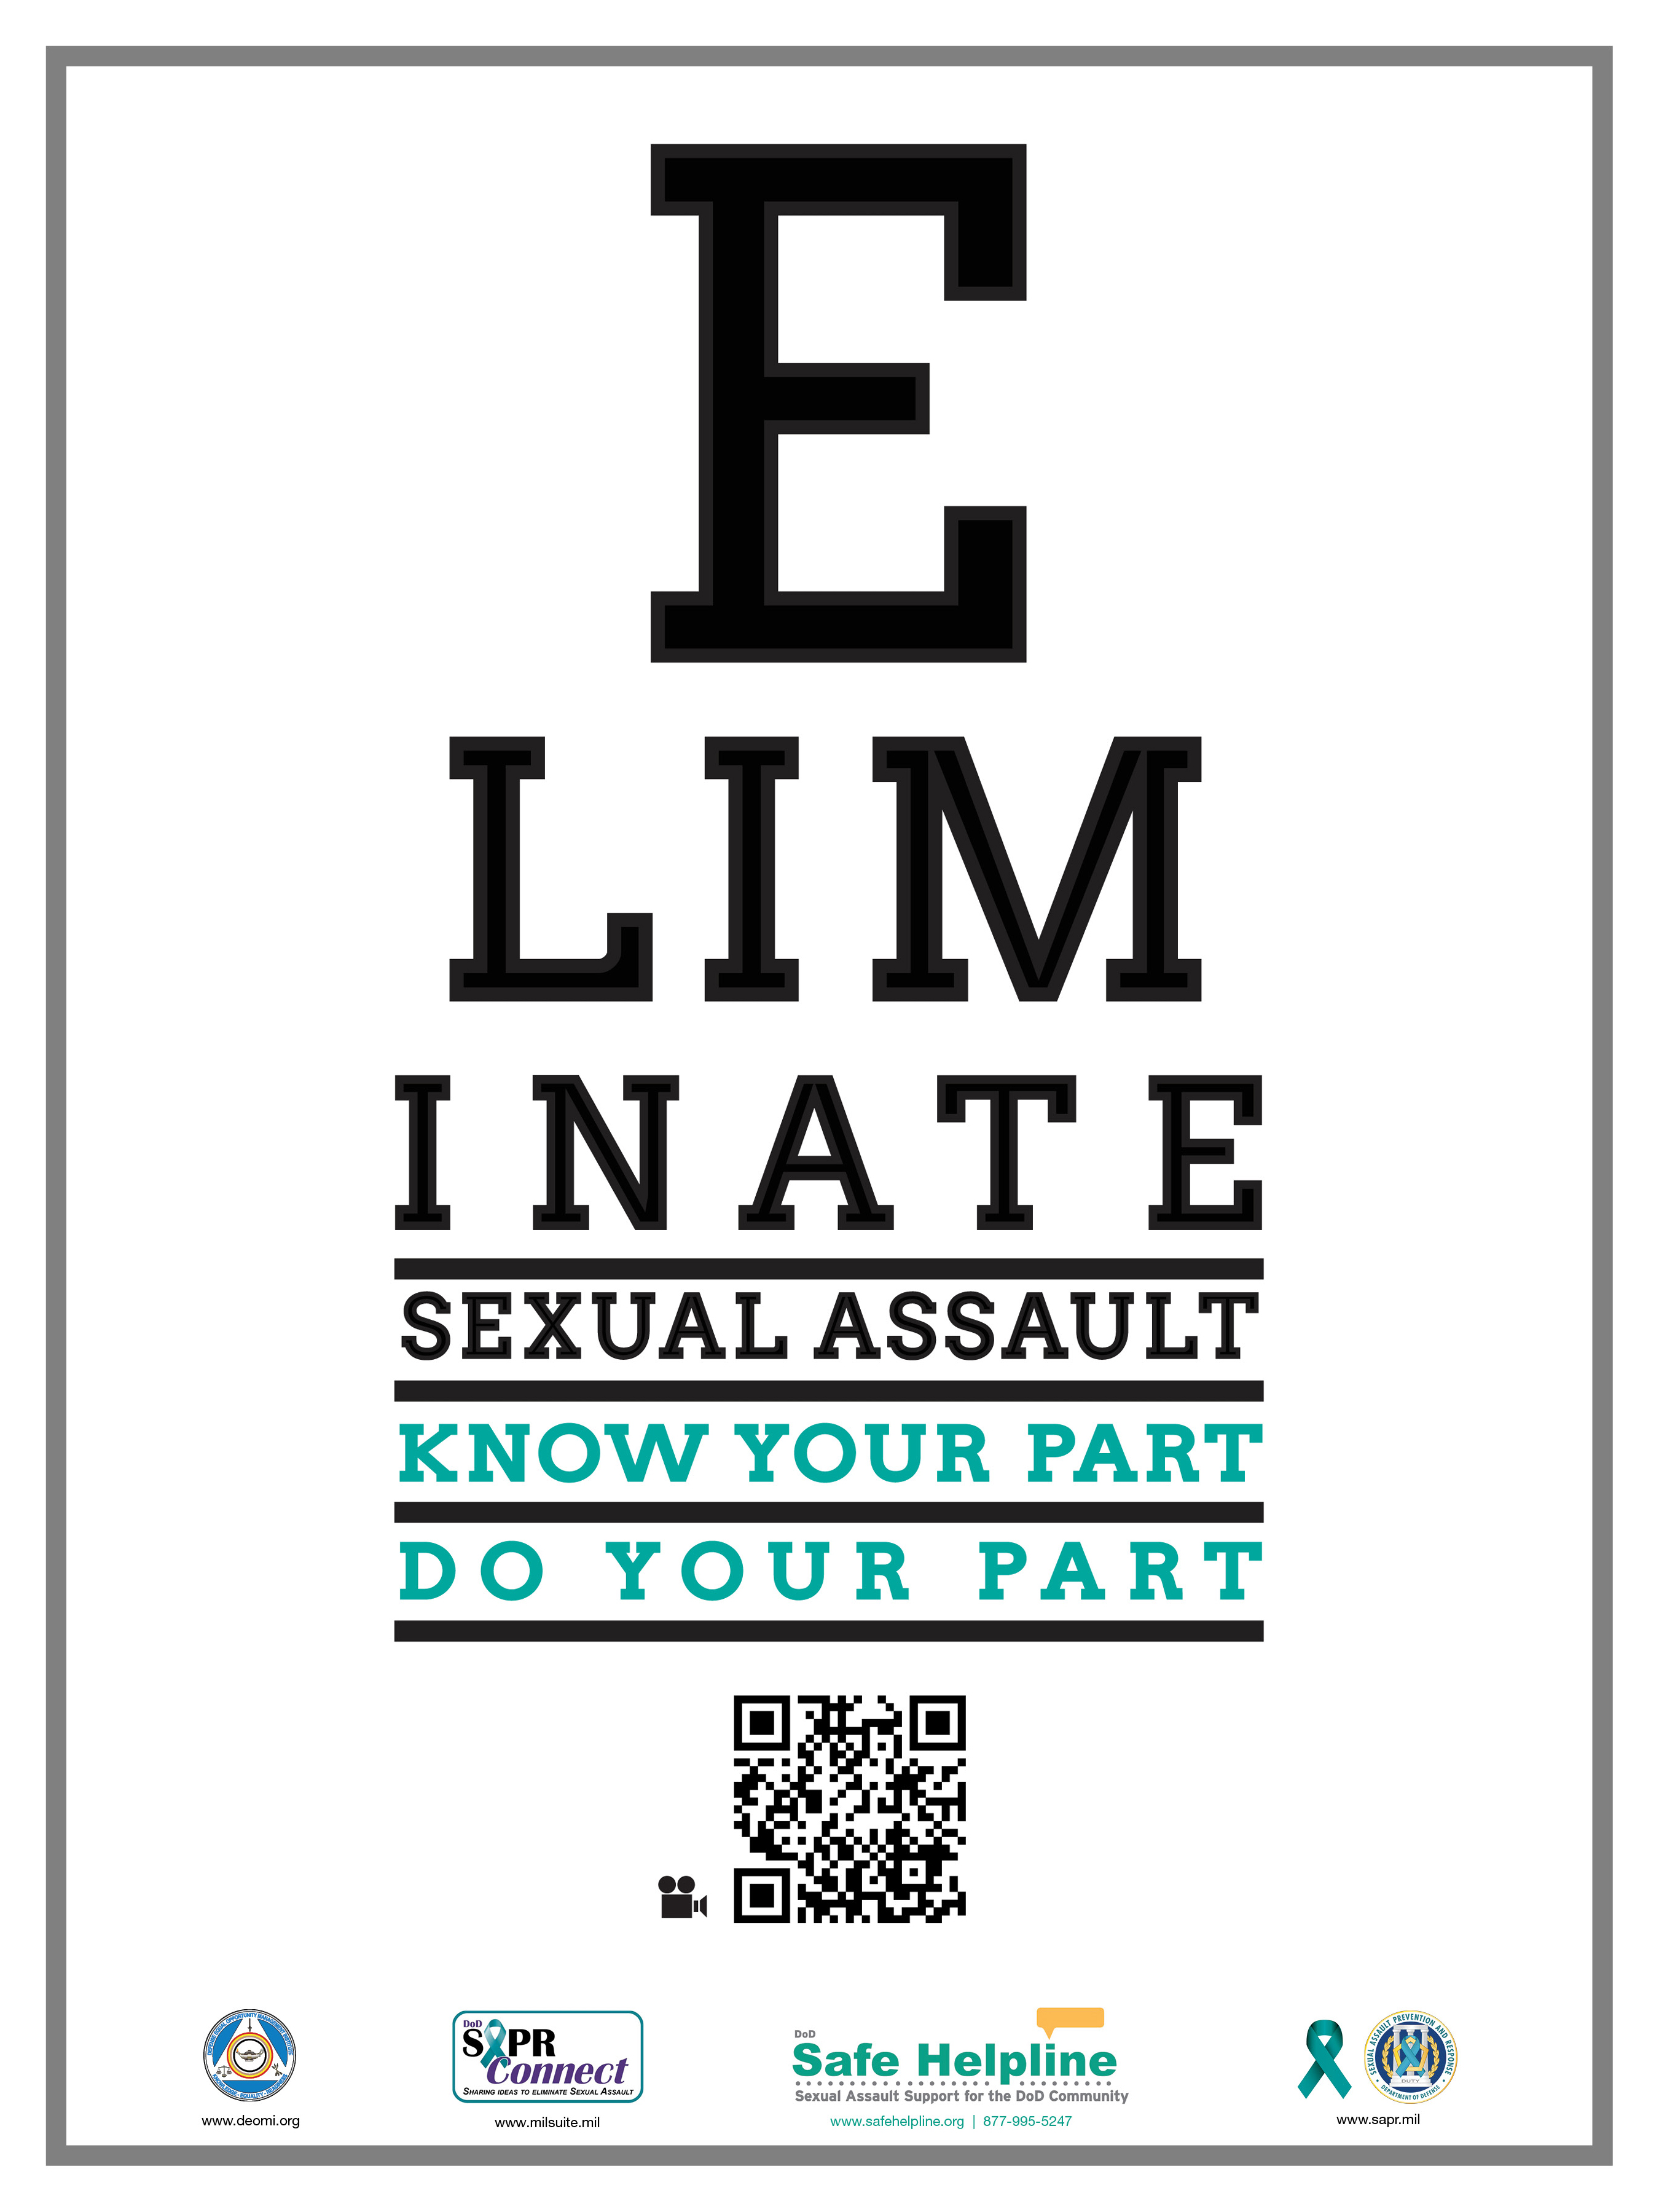 Eliminate Sexual Assault. Know Your Part. Do Your Part.